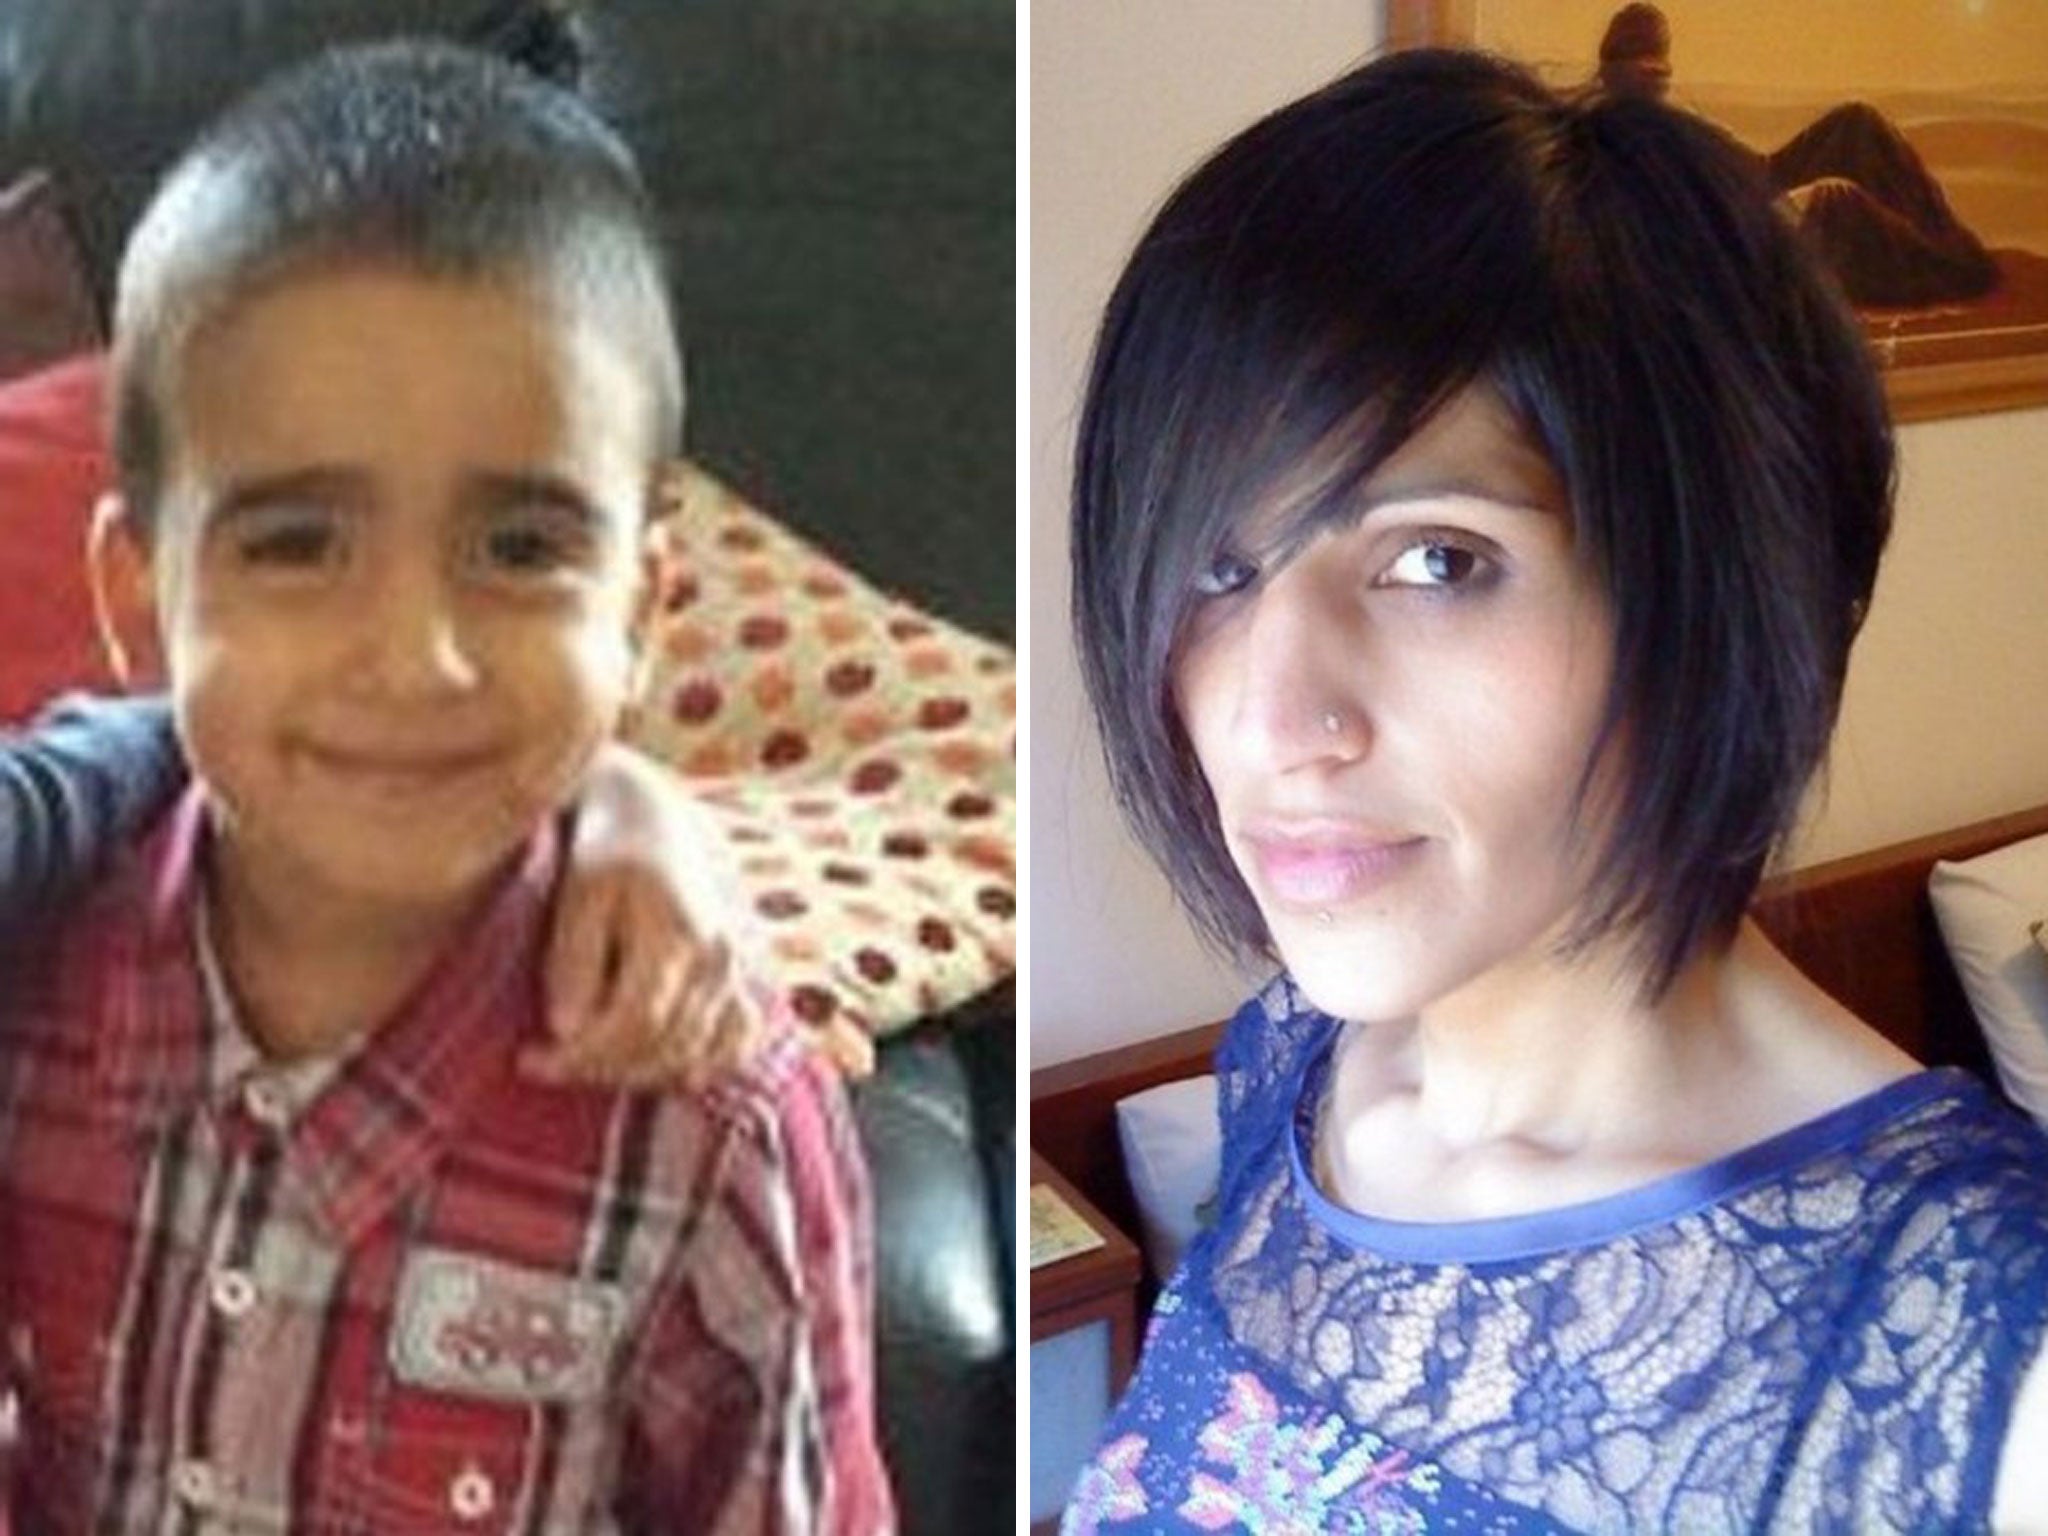 Three-year-old Mikaeel Kular and his mother Rosdeep